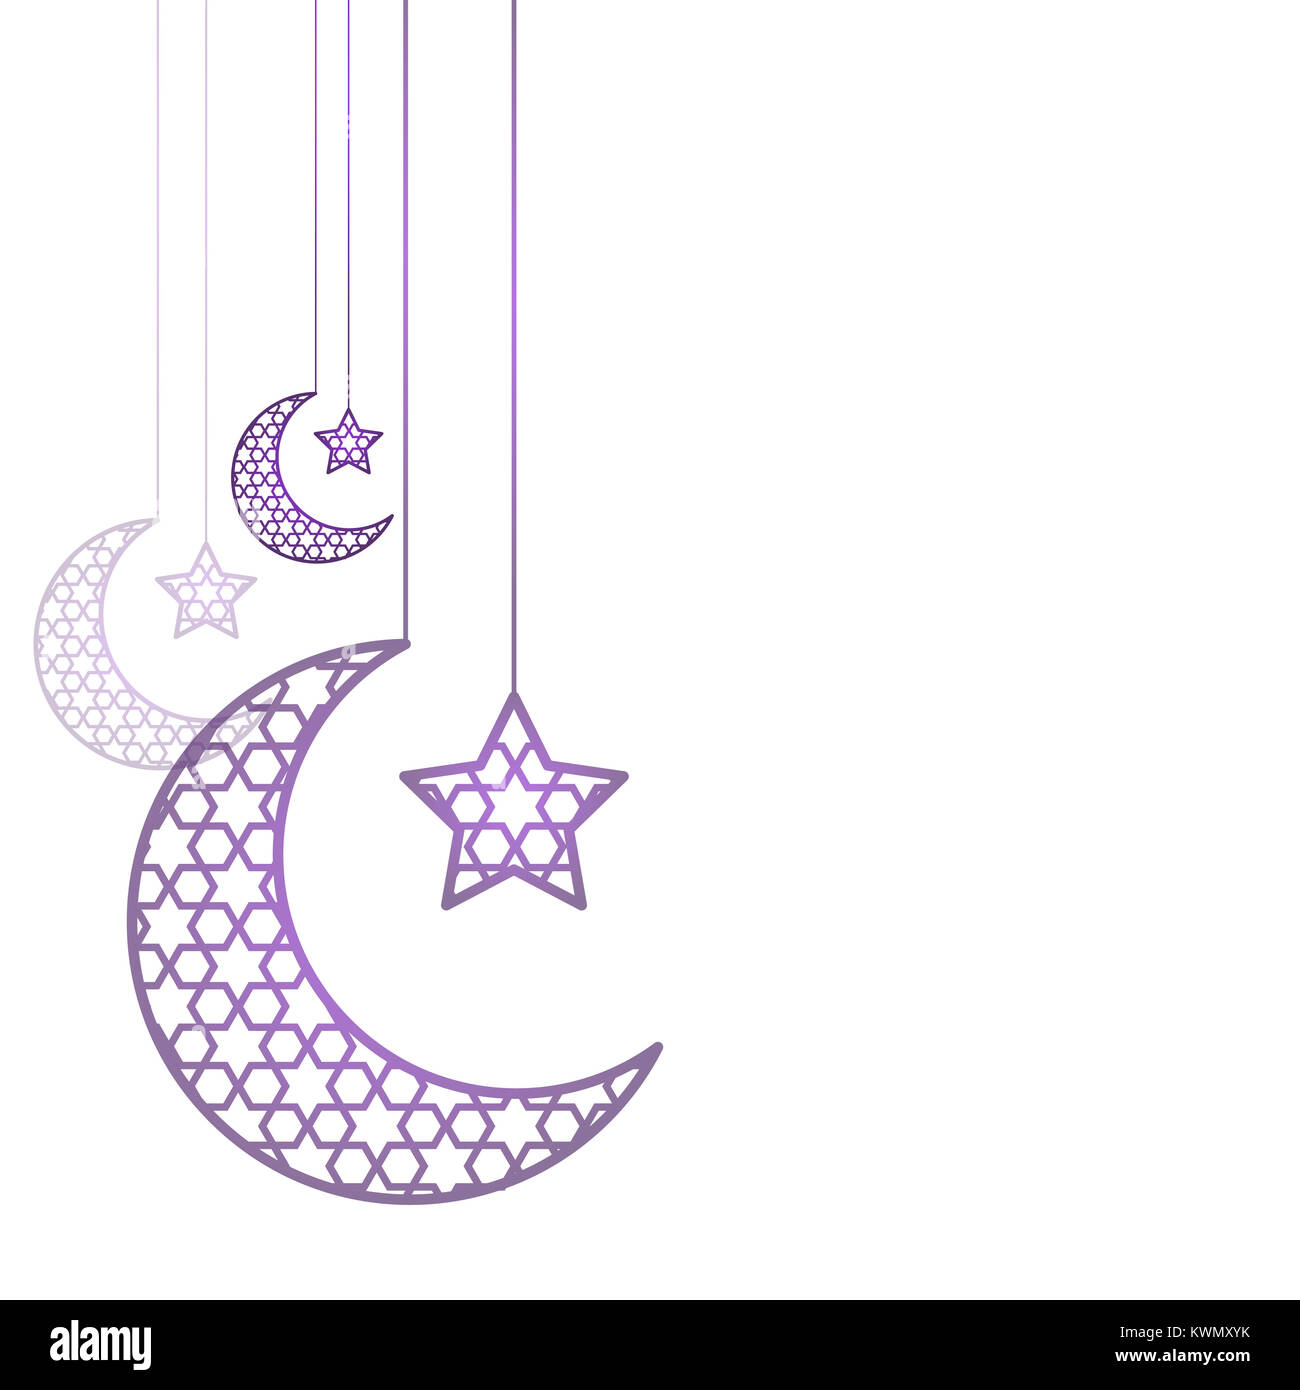 Ramadam Kareem moon and star illustration Stock Photo